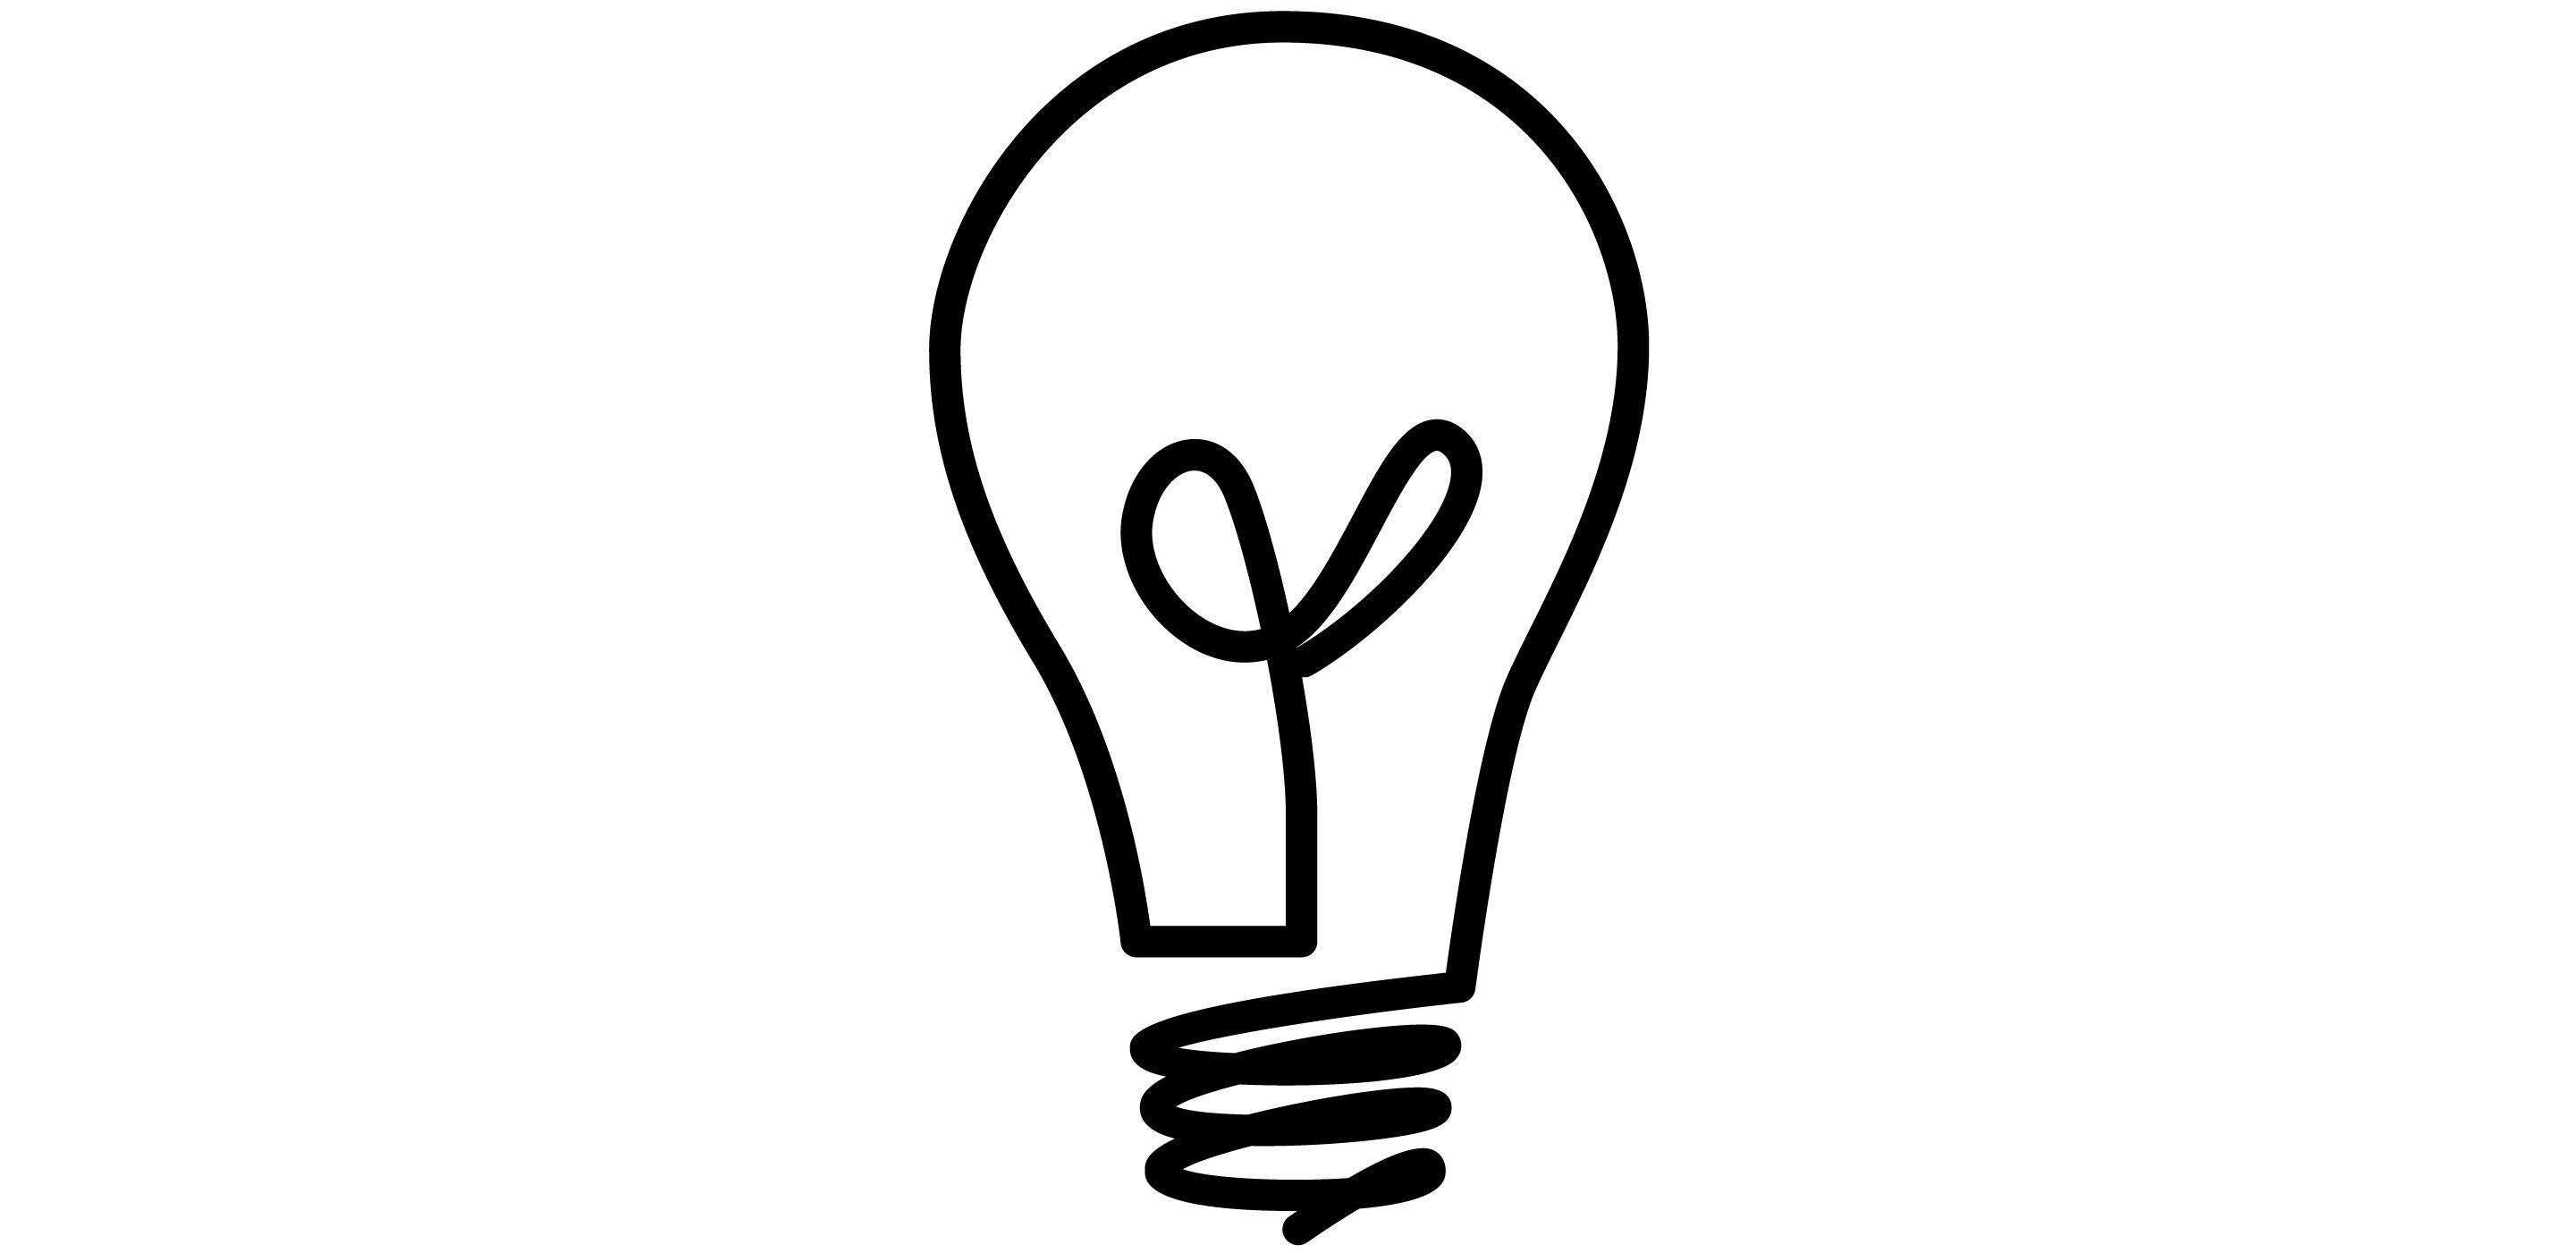 Lightbulb light bulb clipart images illustrations photos